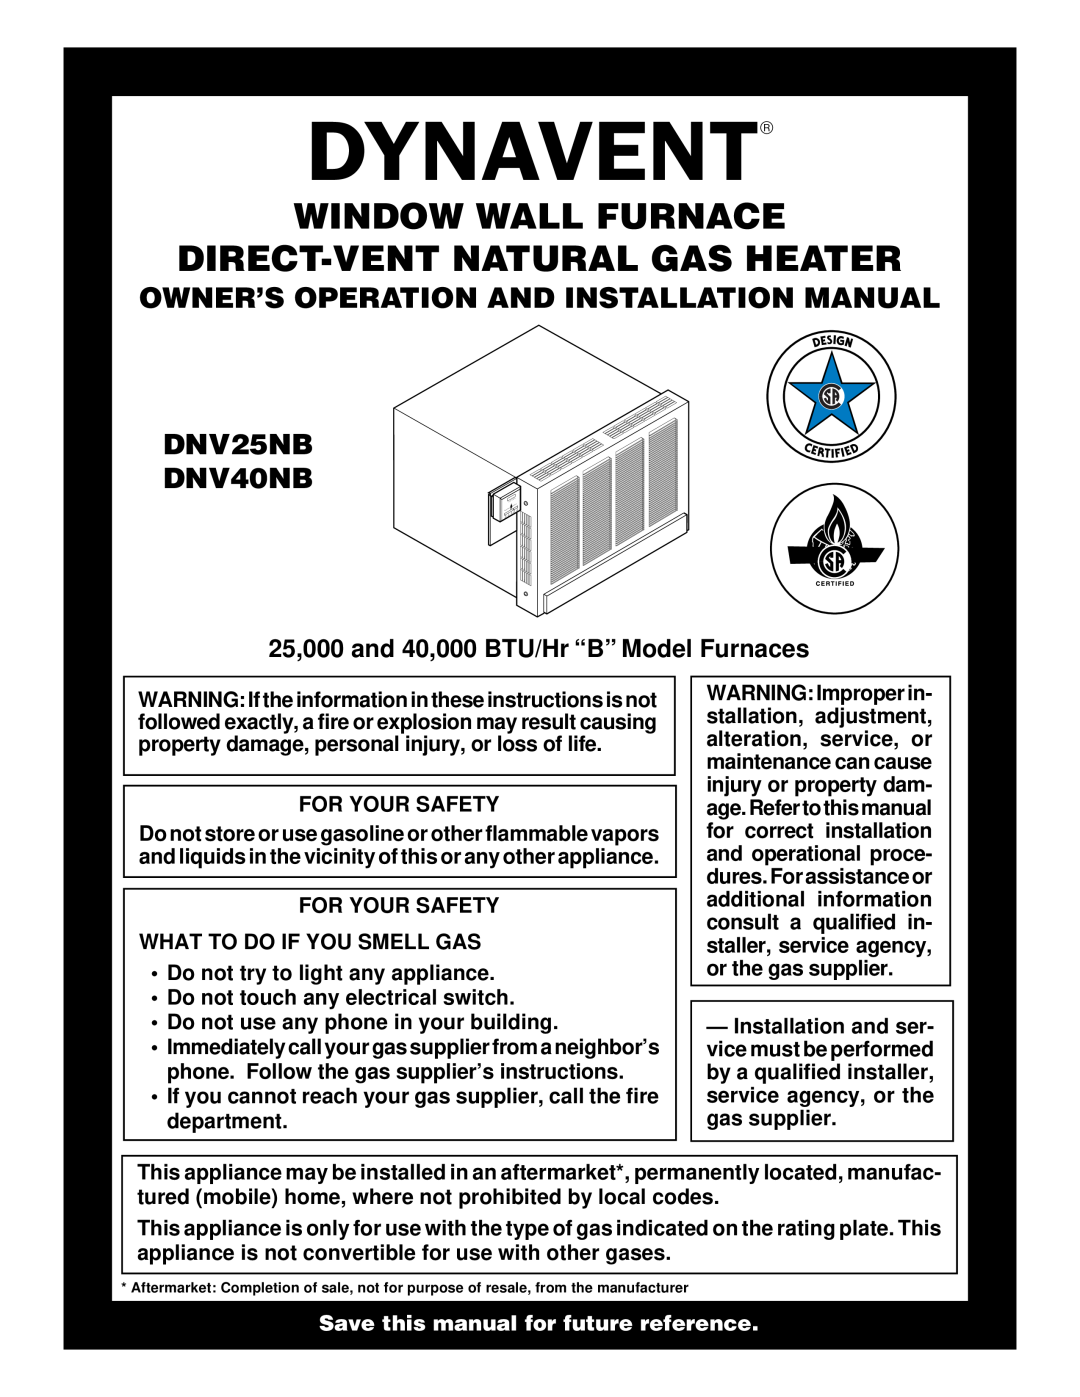 Desa DNV25NB installation manual Window Wall Furnace Direct-Ventnatural Gas Heater, DNV40NB, Dynavent 